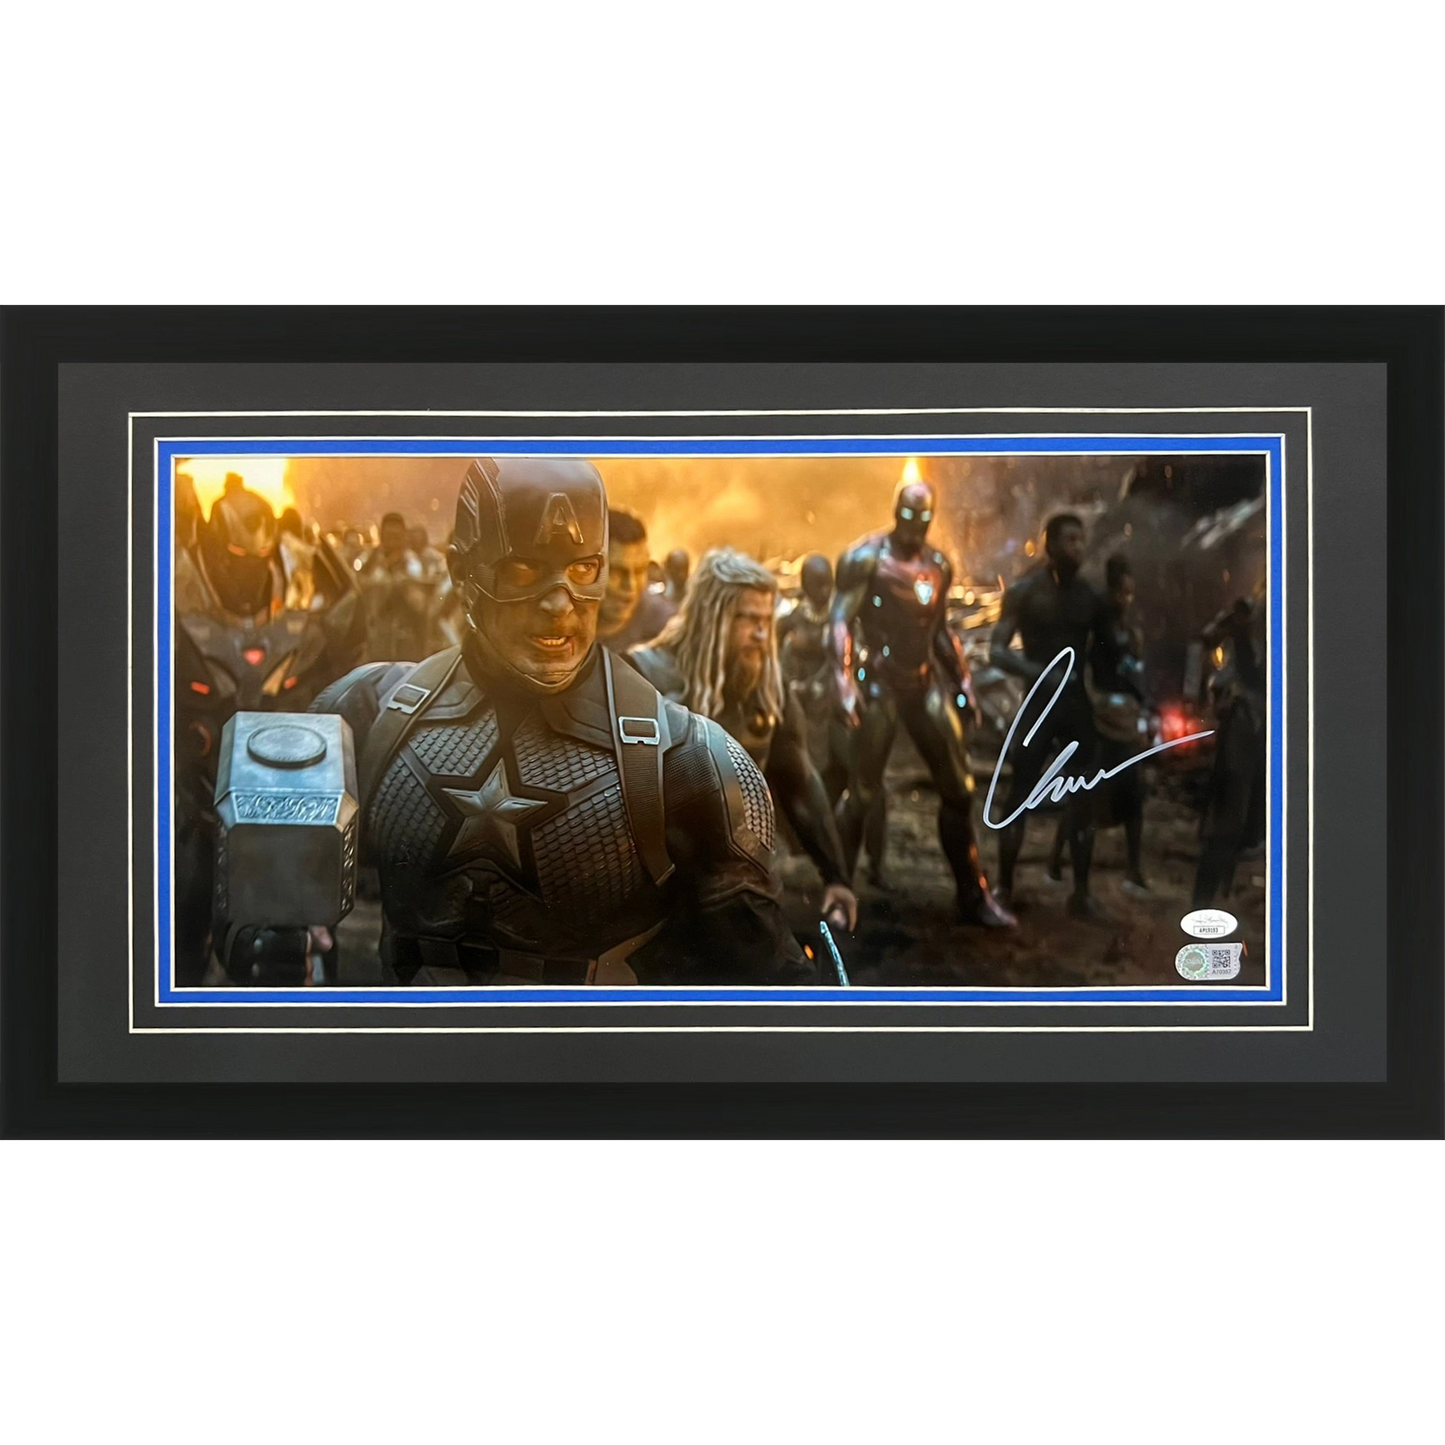 Chris Evans Autographed Marvel Captain America Deluxe Framed 10x20 Photo - SWAU JSA